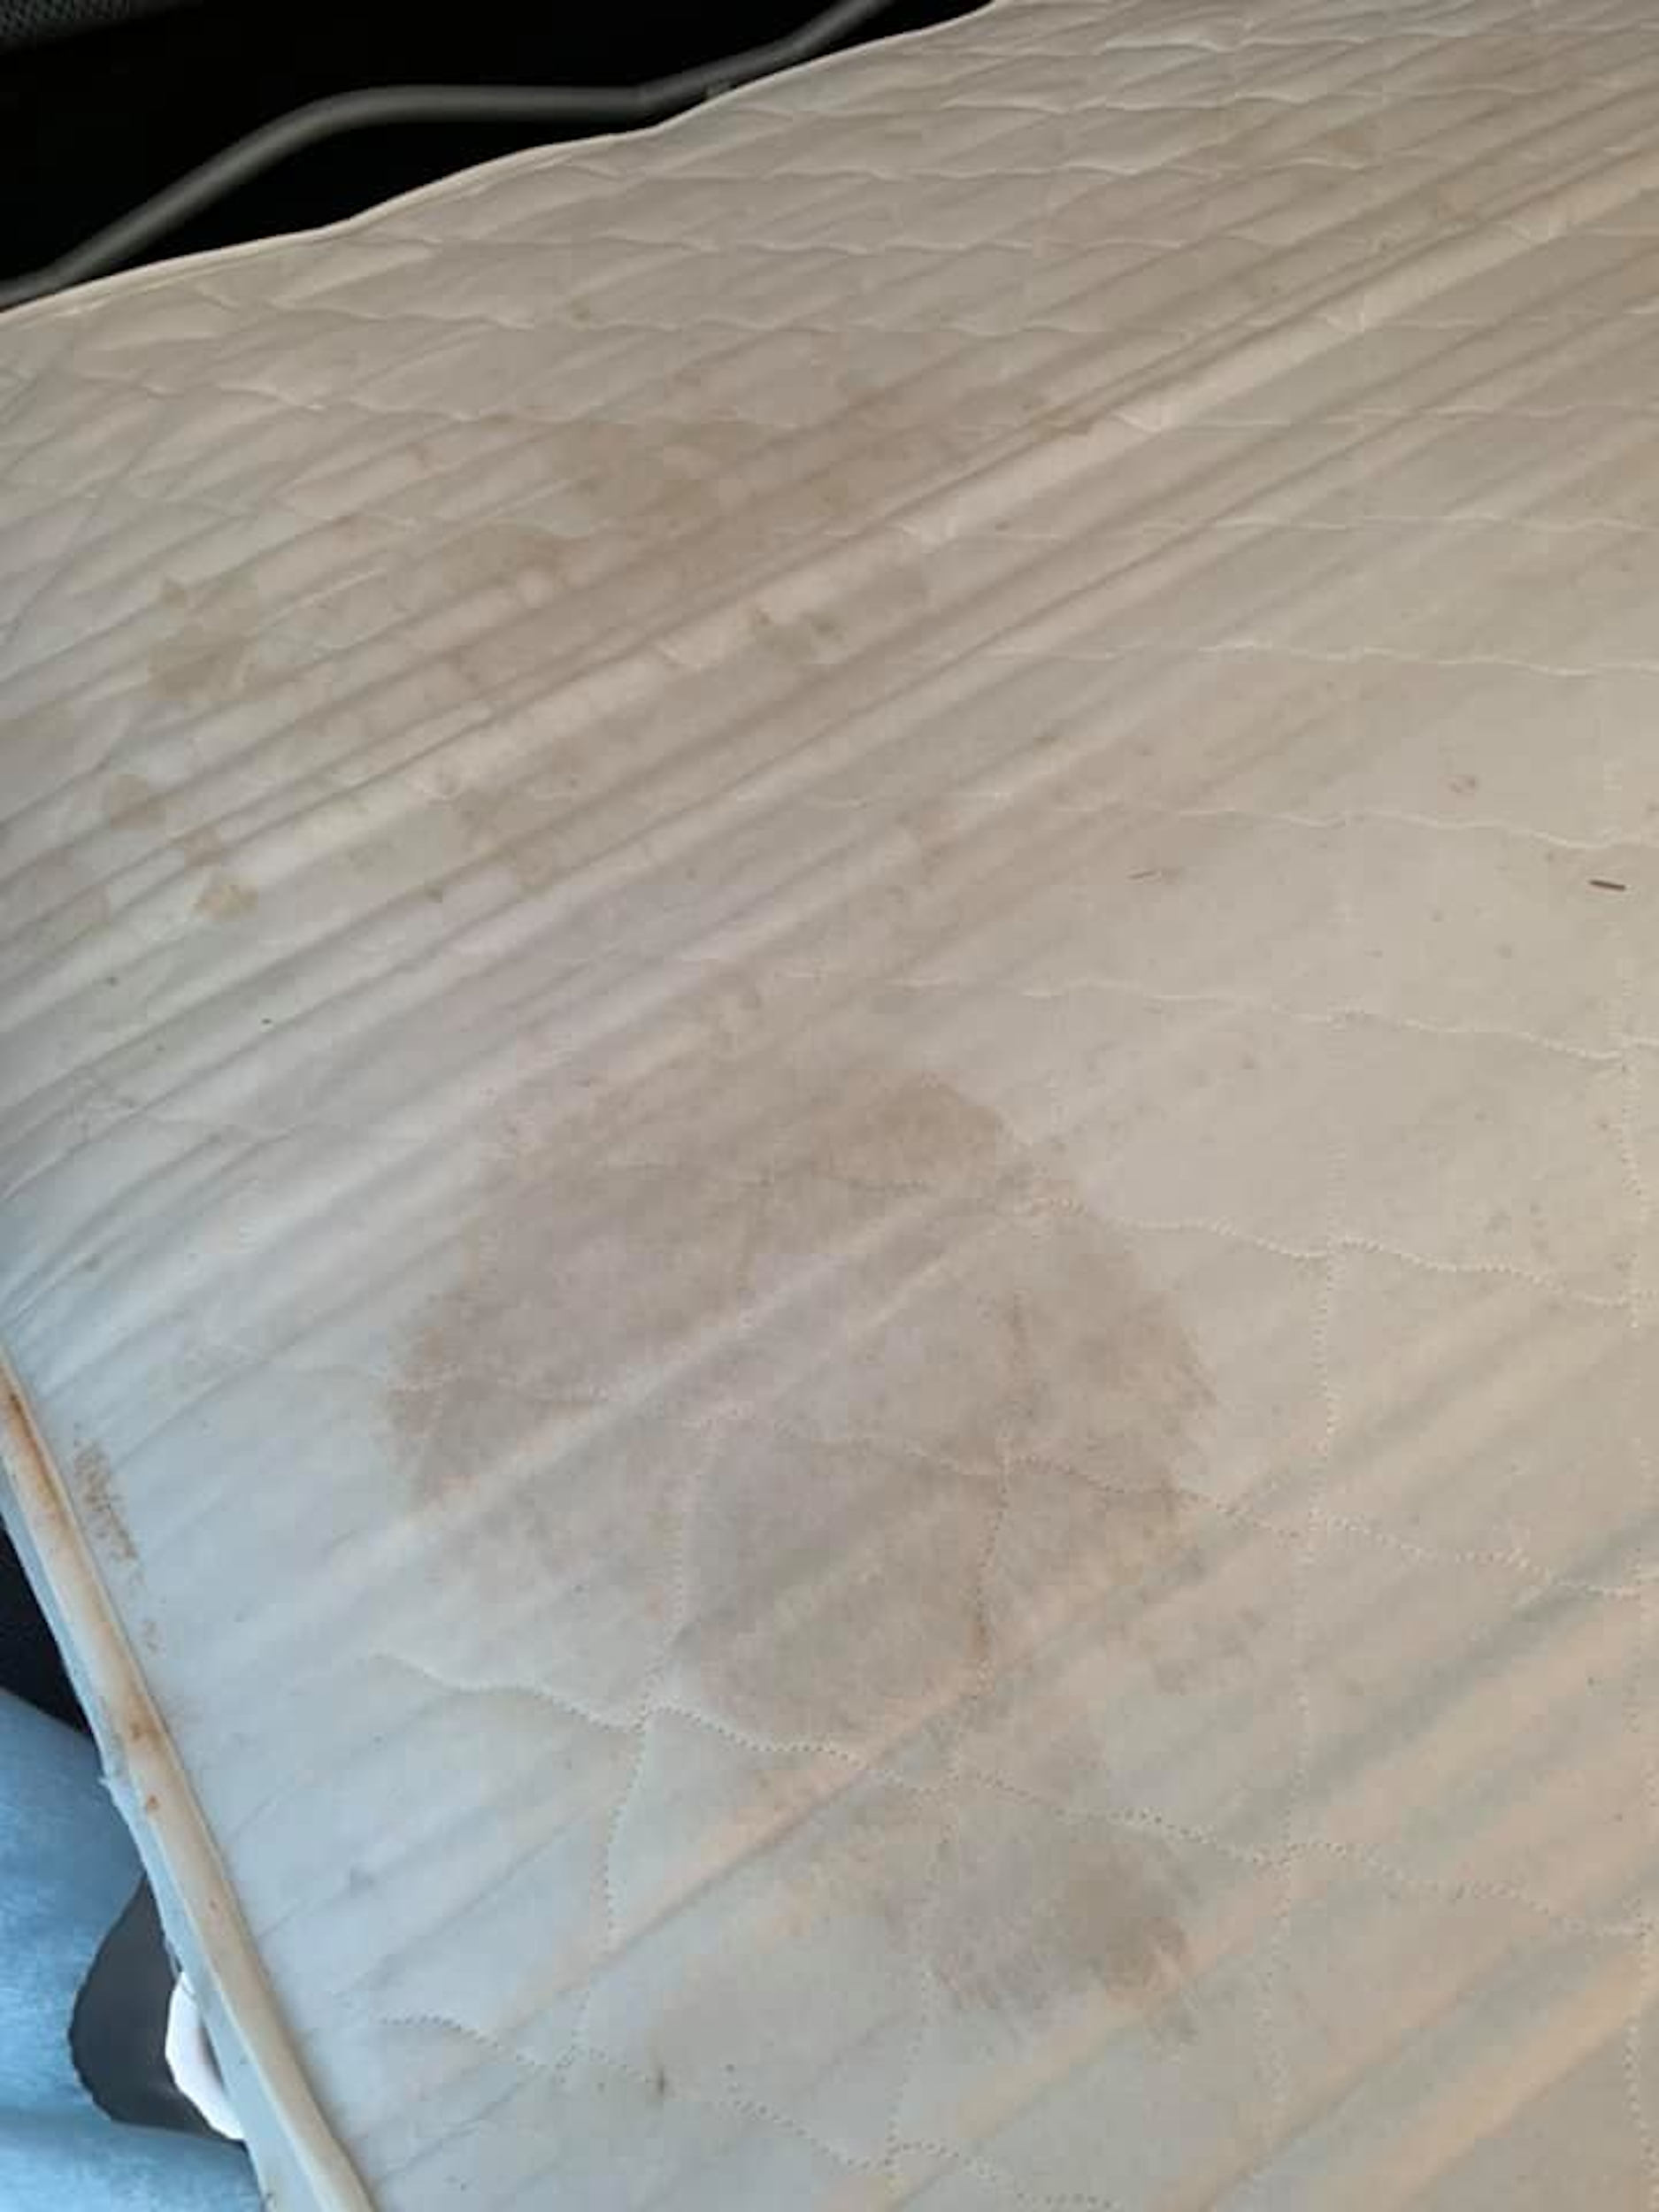 Stains on mattress